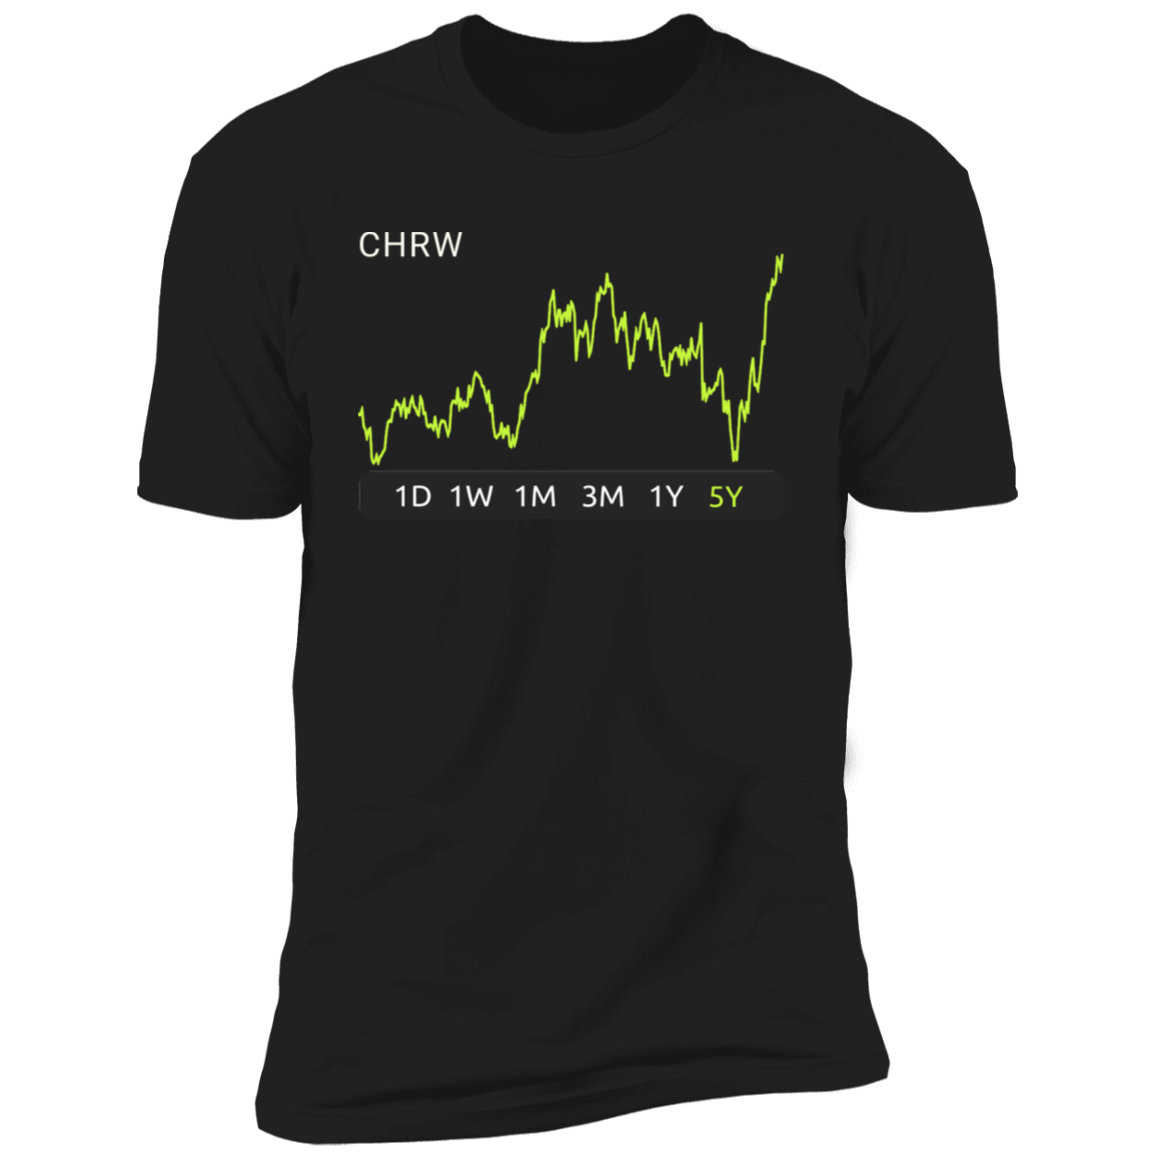 CHRW Stock 5y Premium T-Shirt